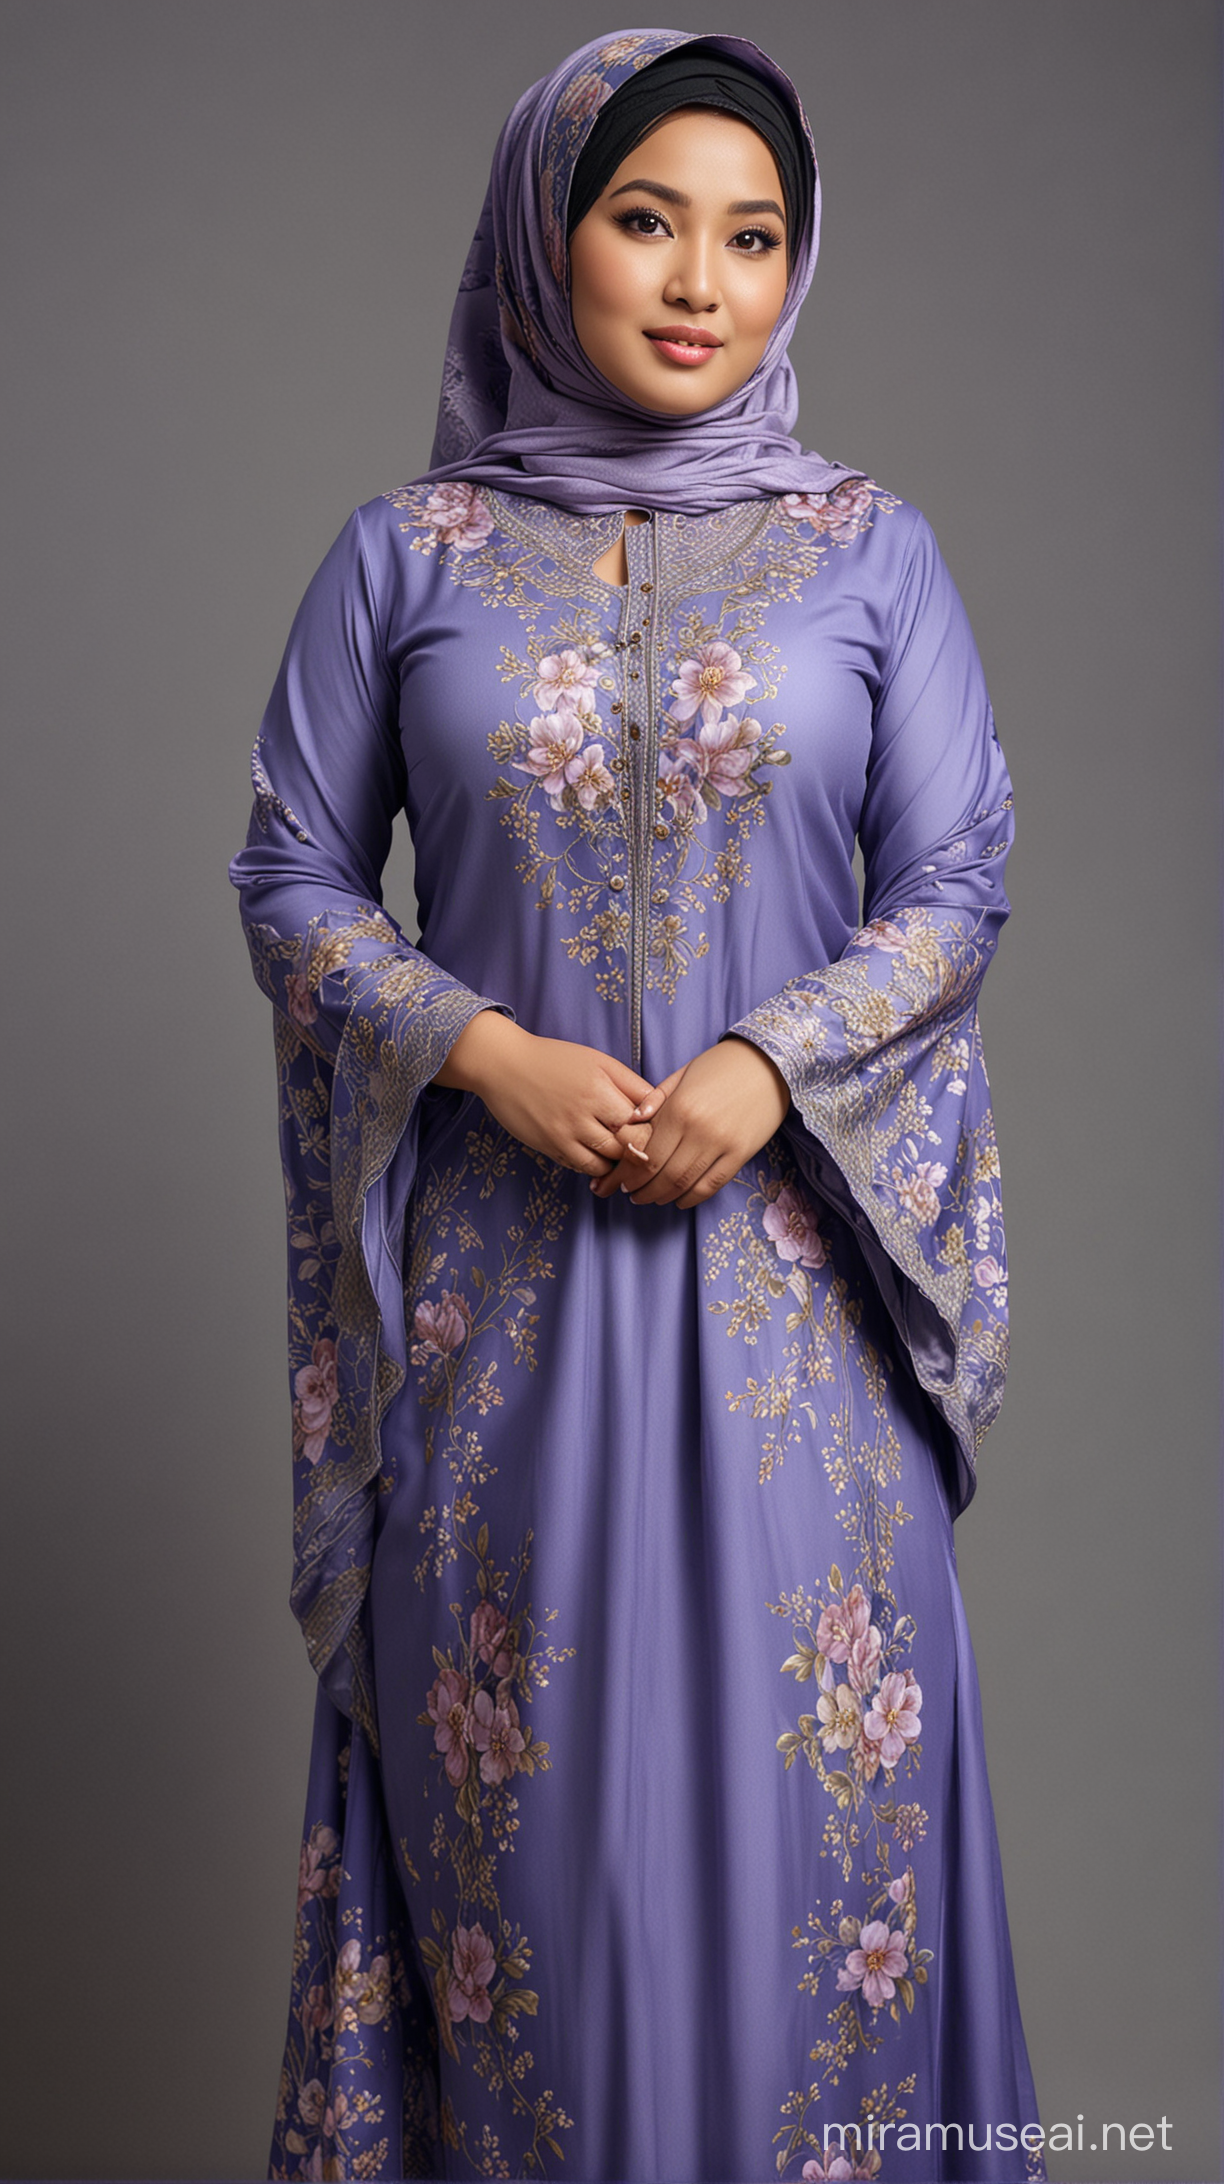 Elegant Plus Size Malay Woman in Royal Blue Hijab and Lavender Kebaya